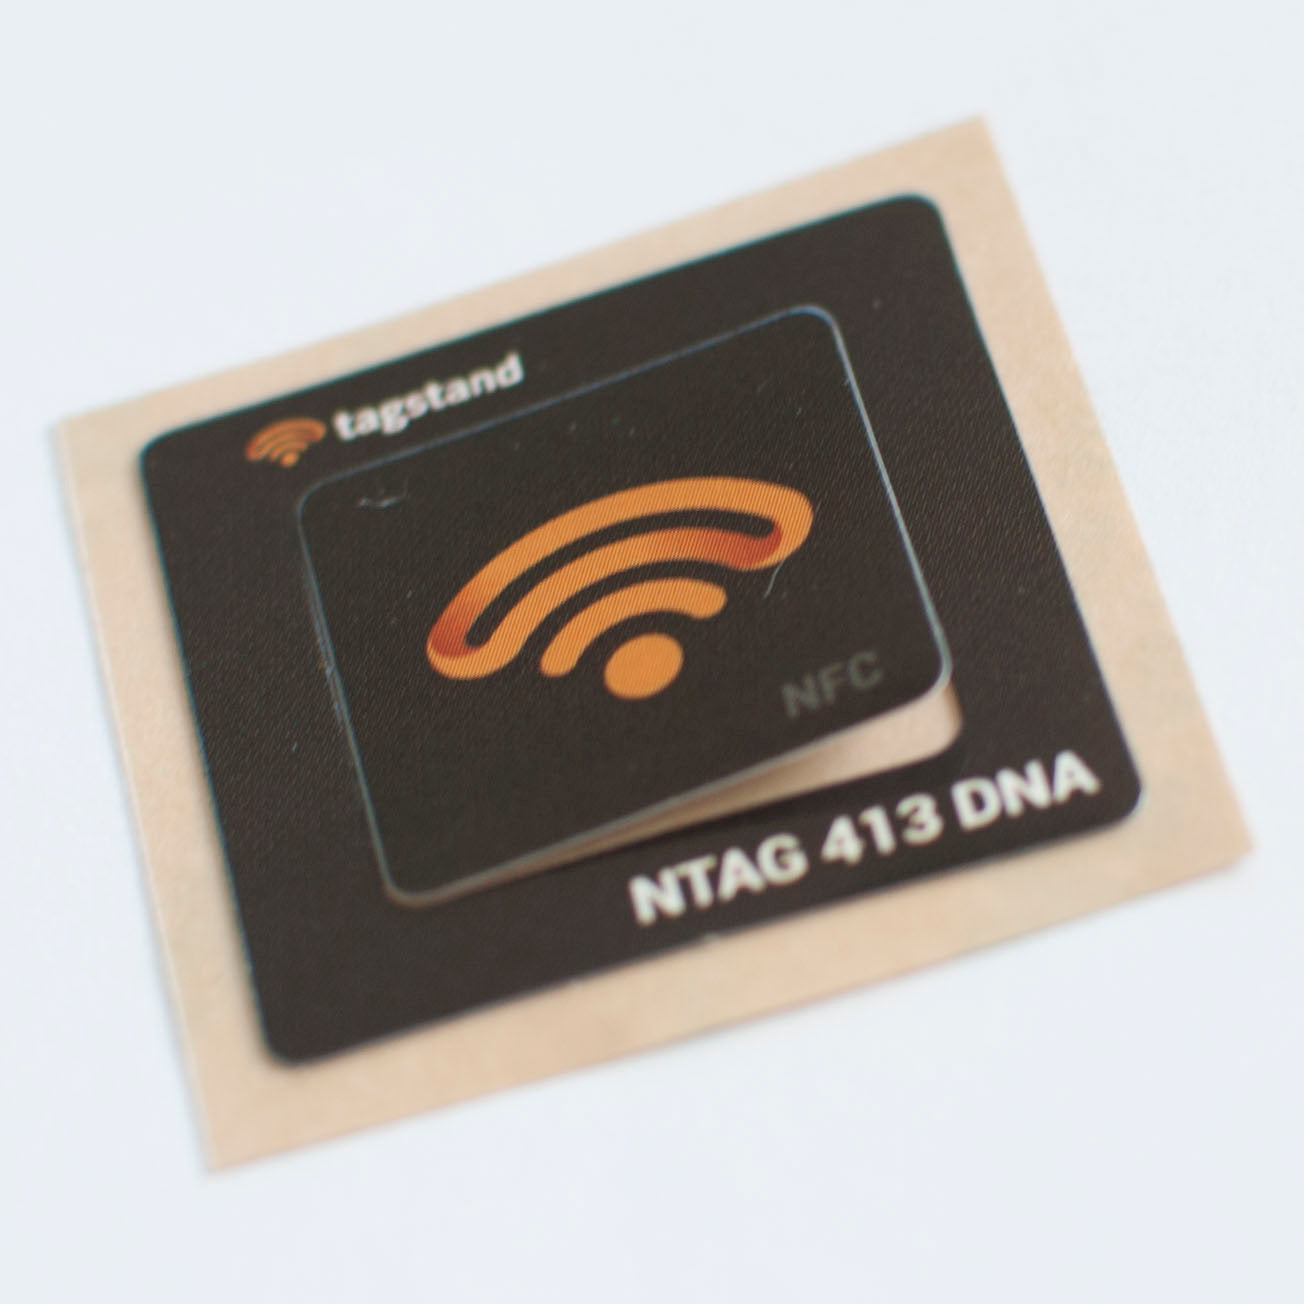 NTAG 413 DNA Sticker